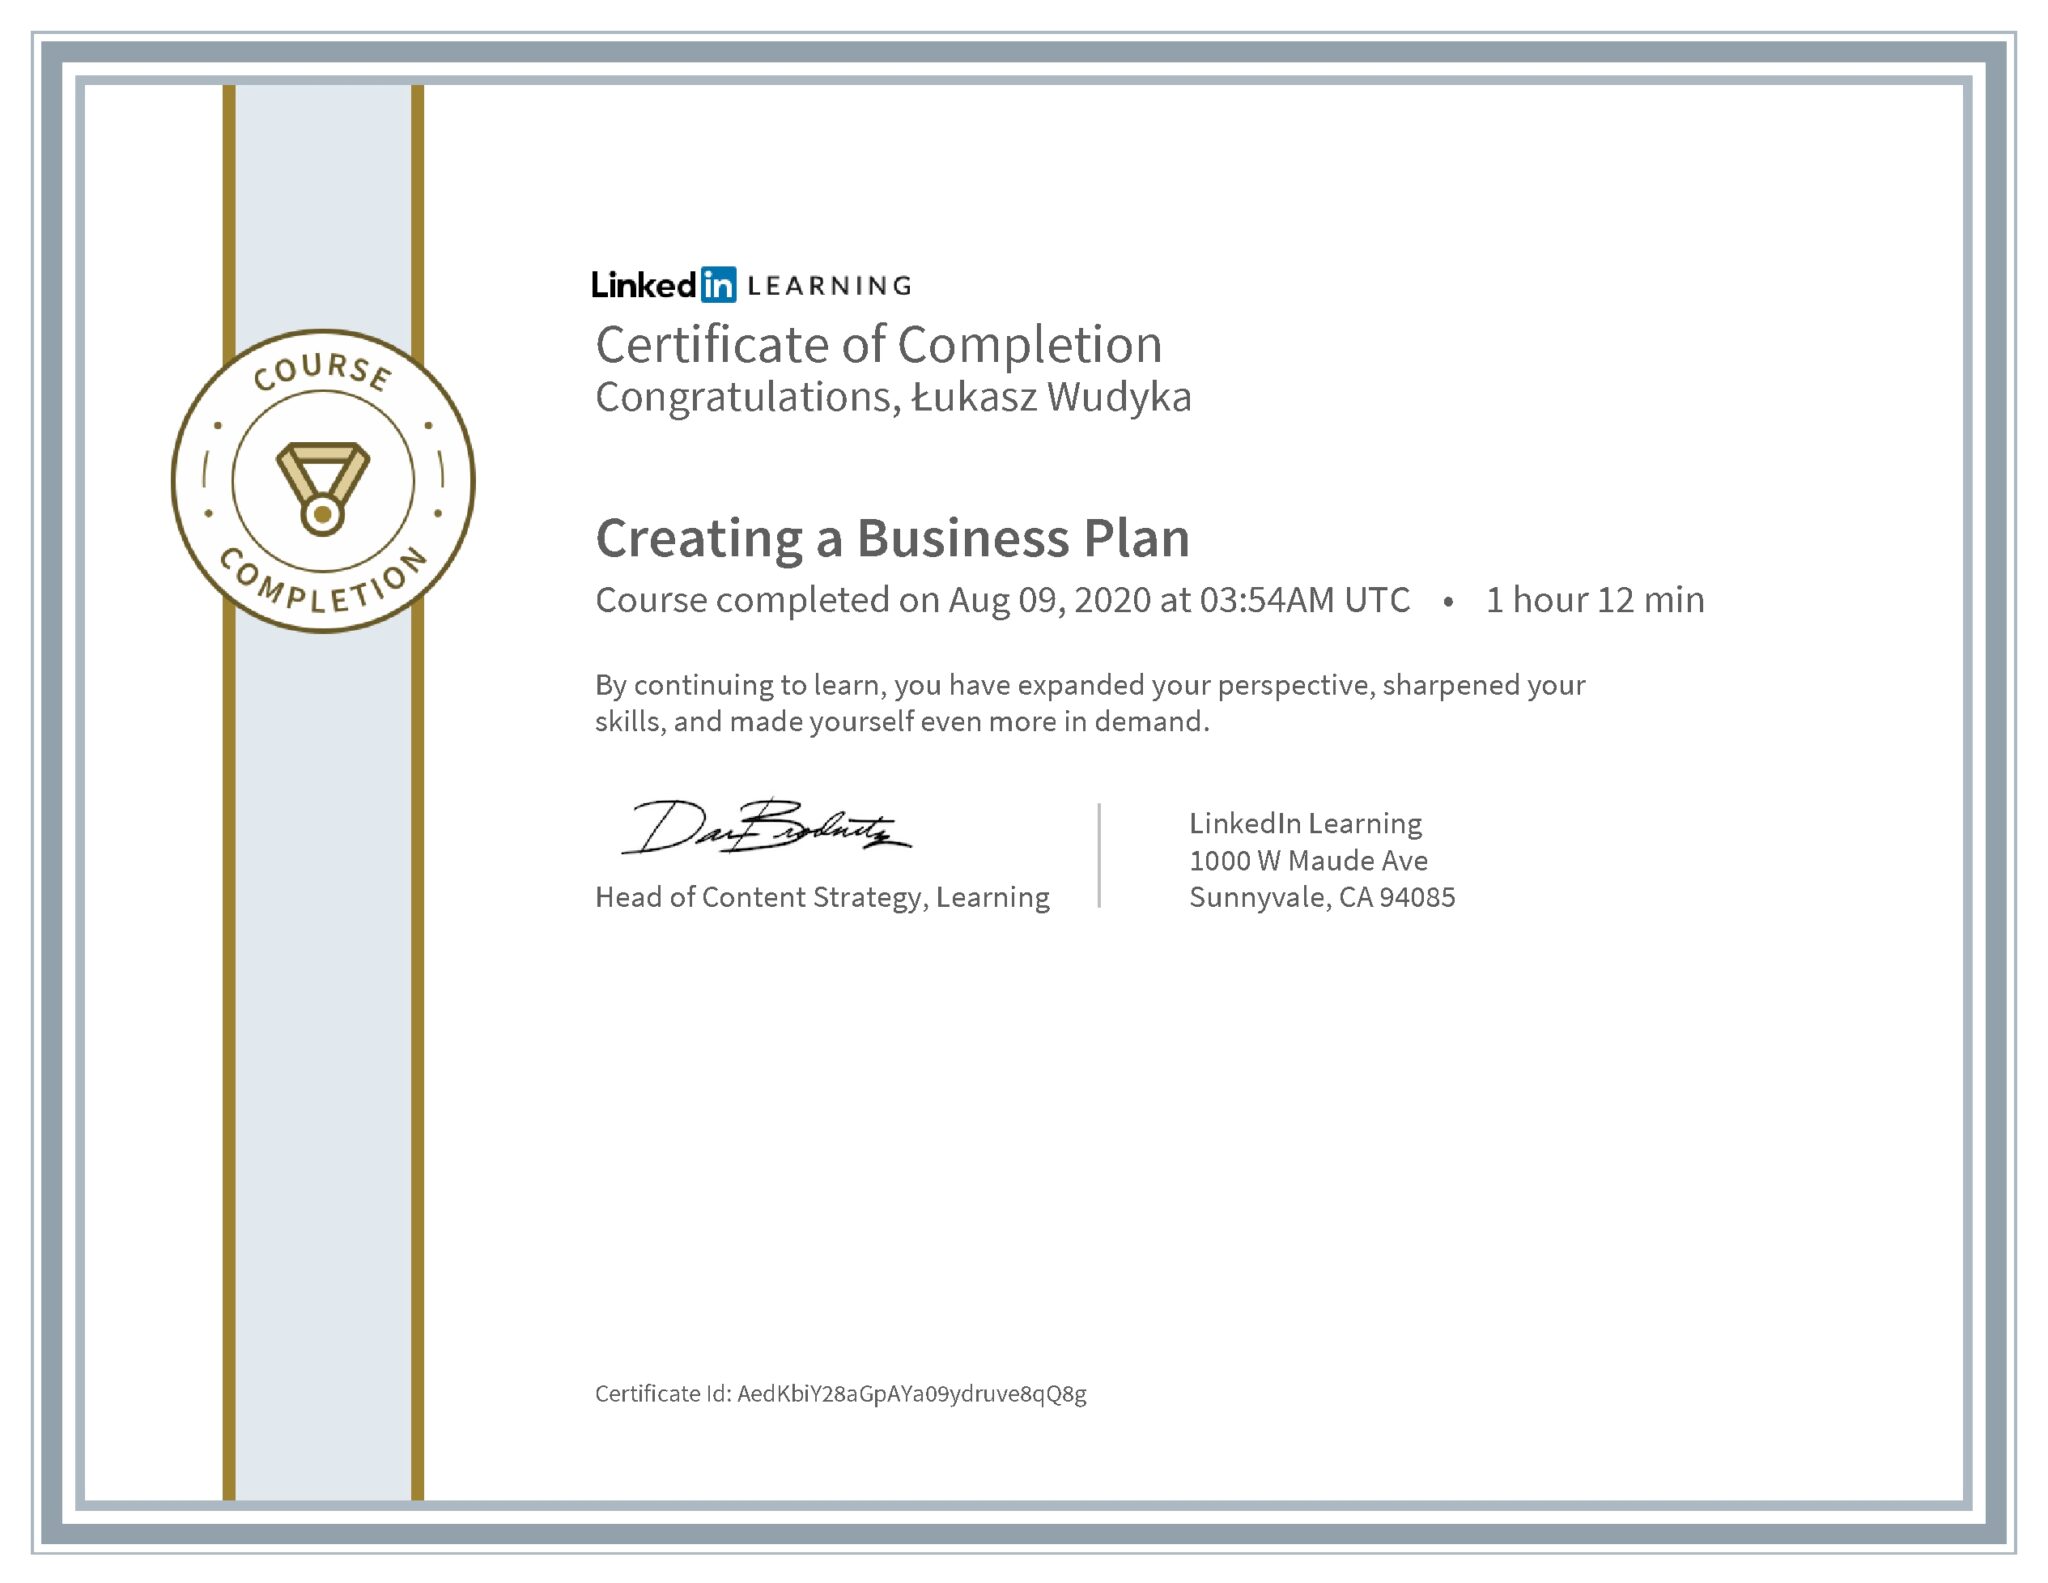 Łukasz Wudyka certyfikat LinkedIn Creating a Business Plan